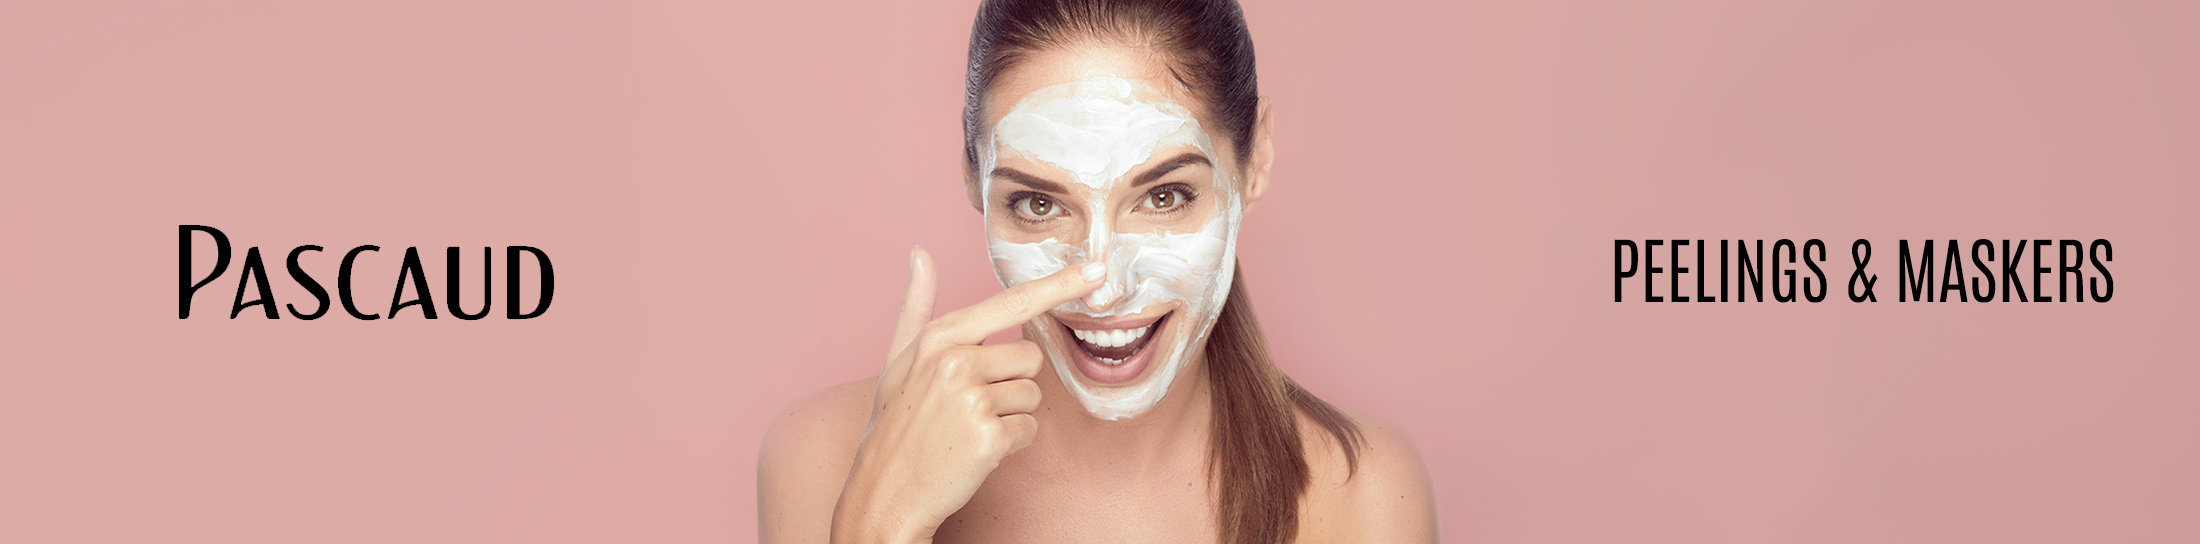 Pascaud peelings & maskers, huidmasker, huidmakers kopen | HuidHuid Skincare